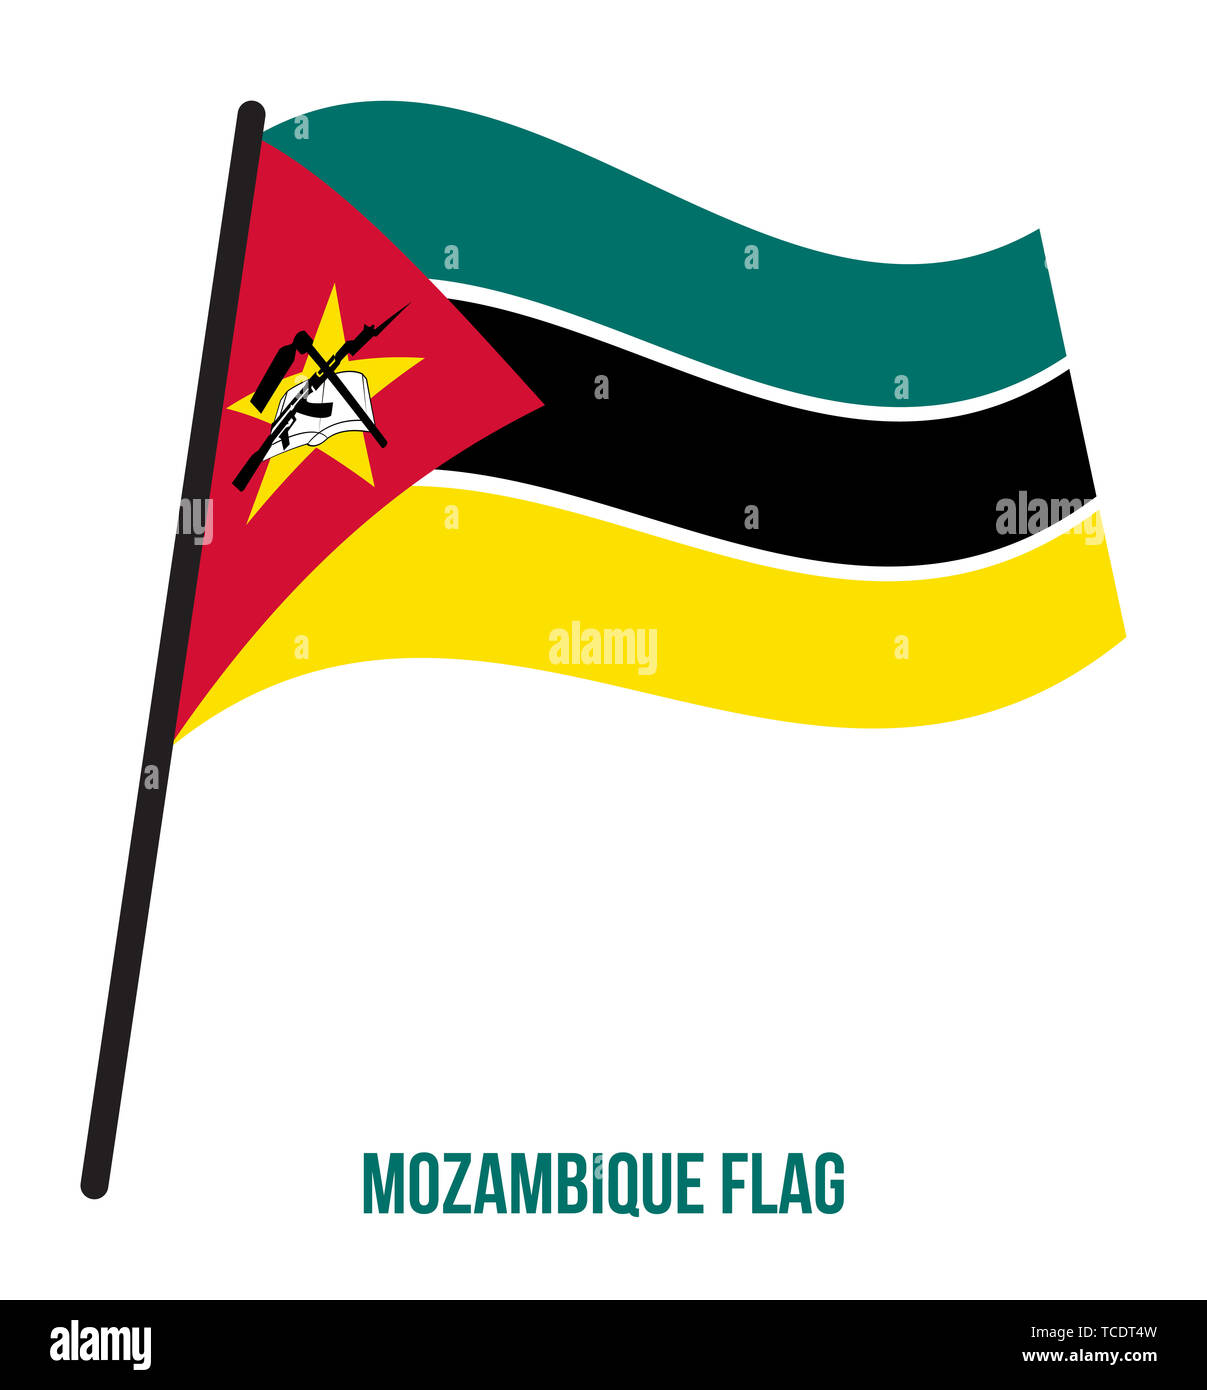 Mozambique Flag Waving Vector Illustration on White Background. Mozambique National Flag. Stock Photo